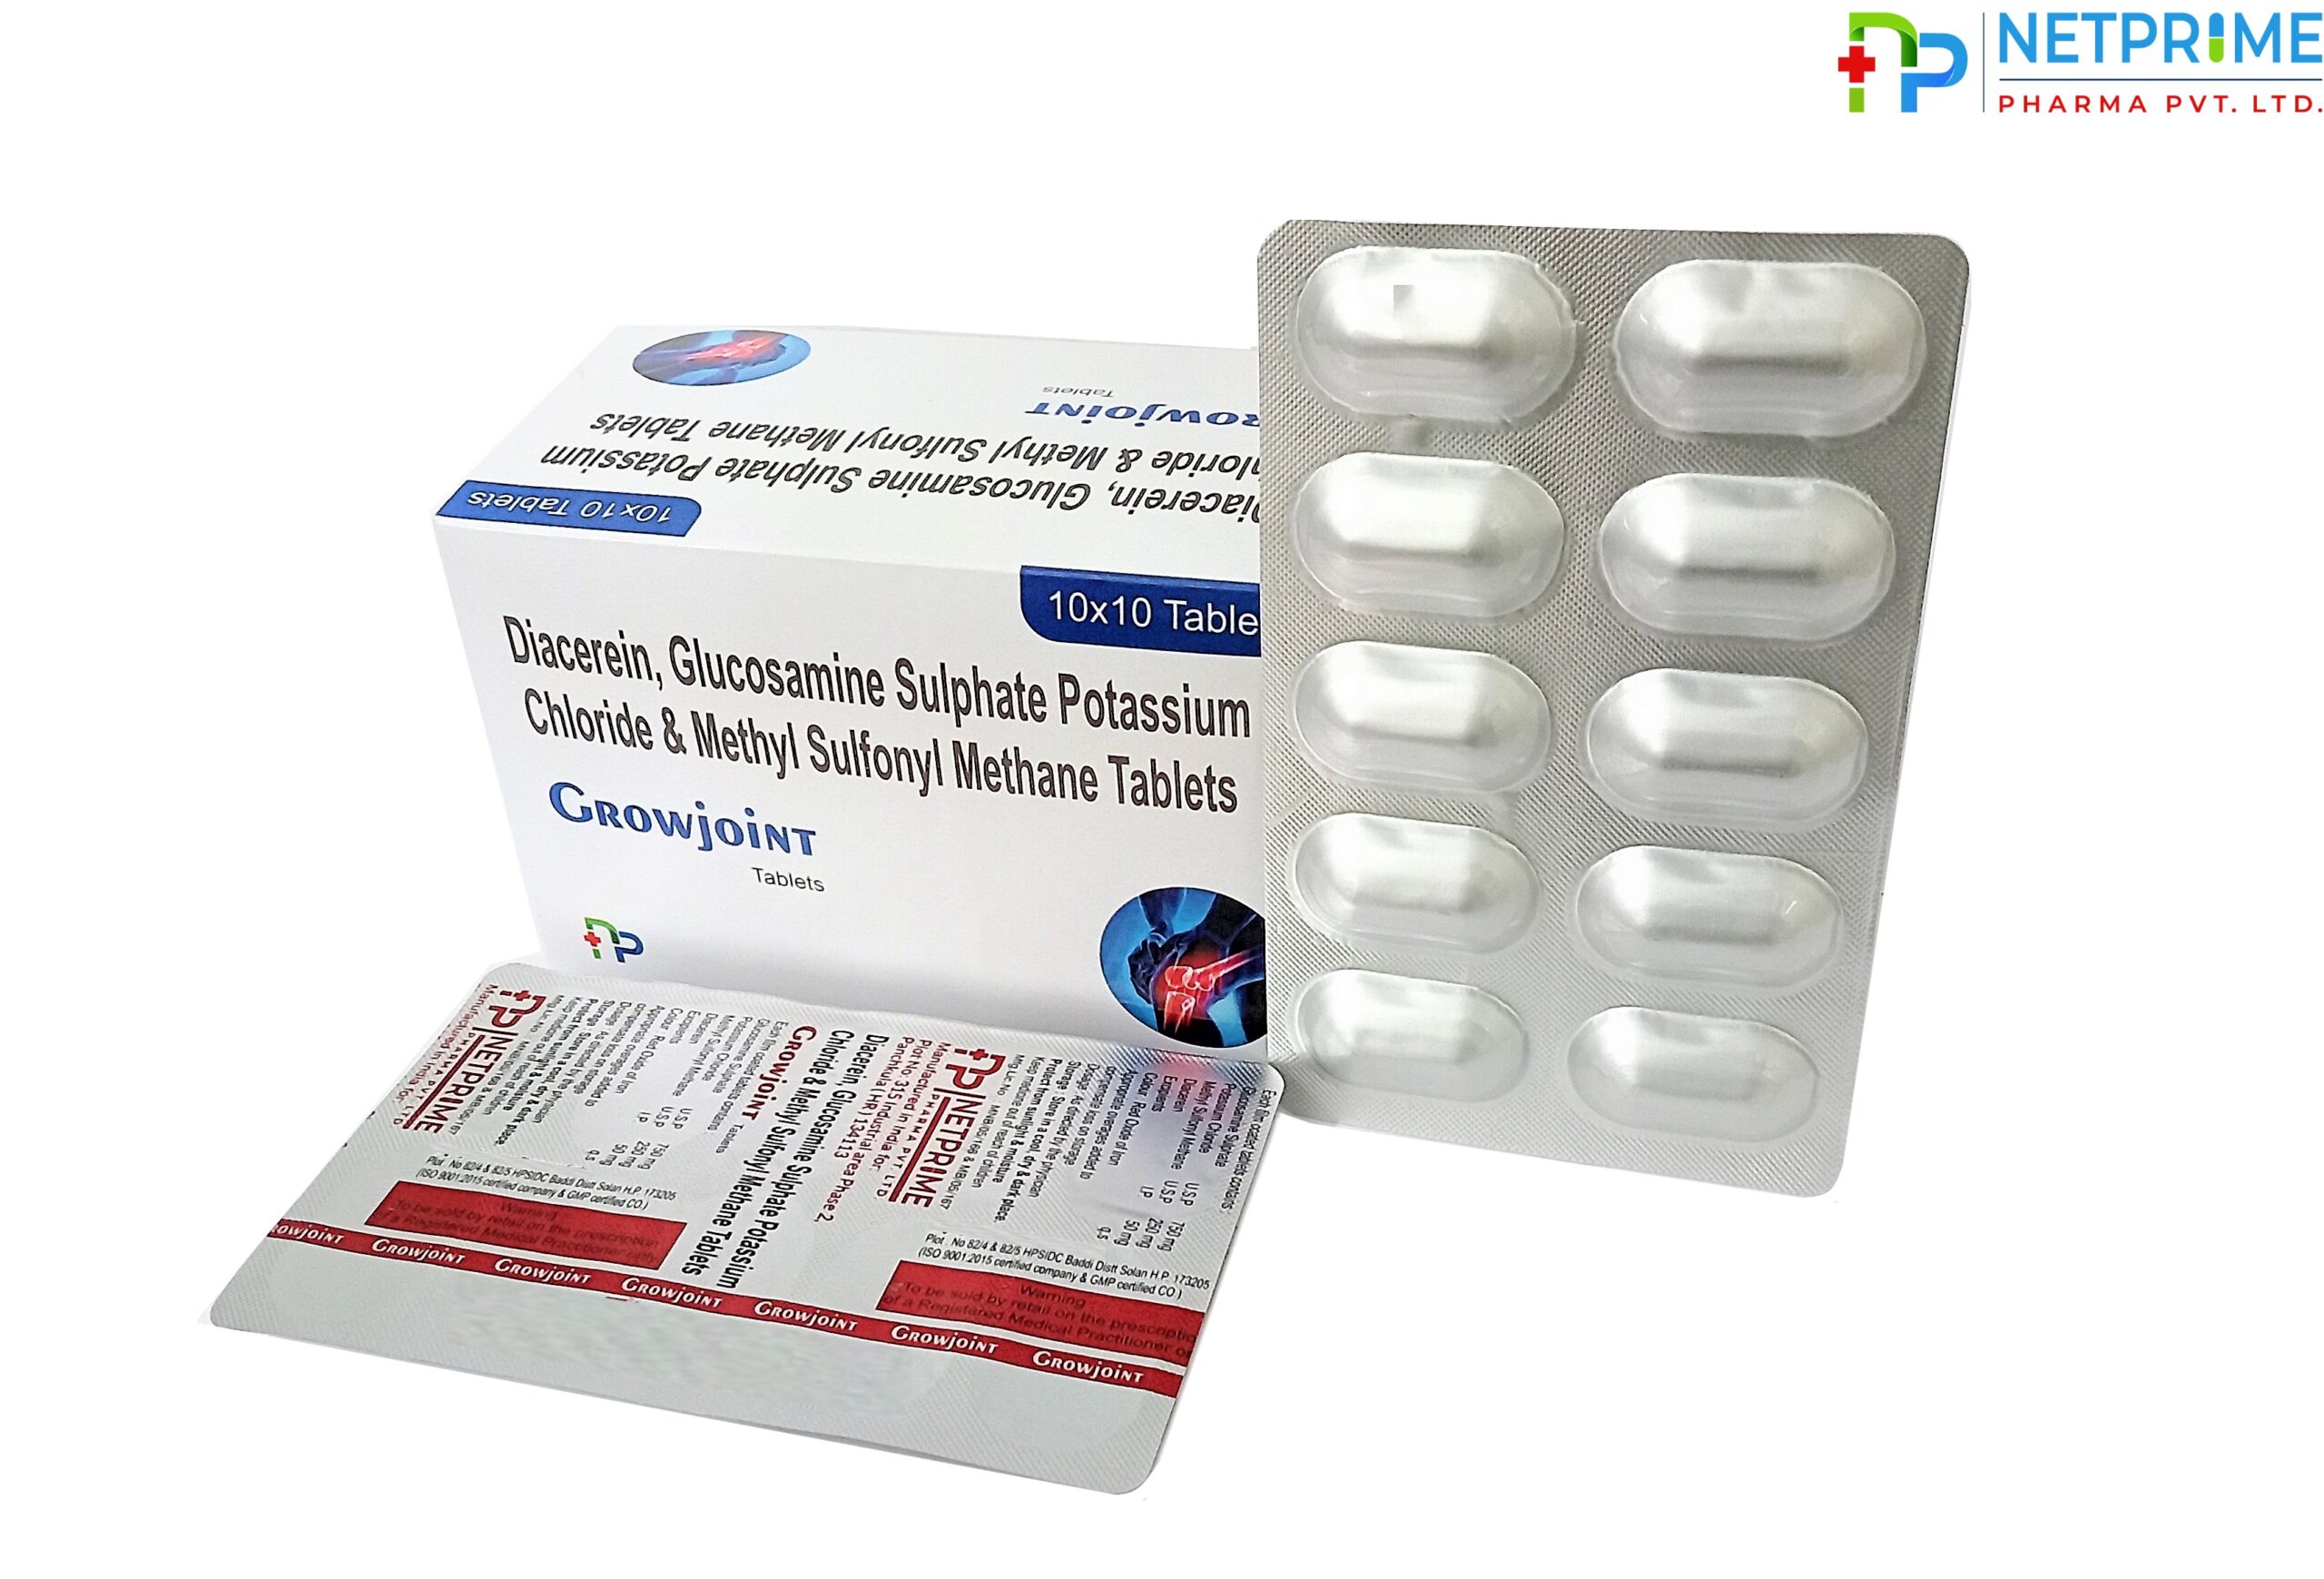 Diacerein, Methylsulphonylmethane and Glucosamine Tablets